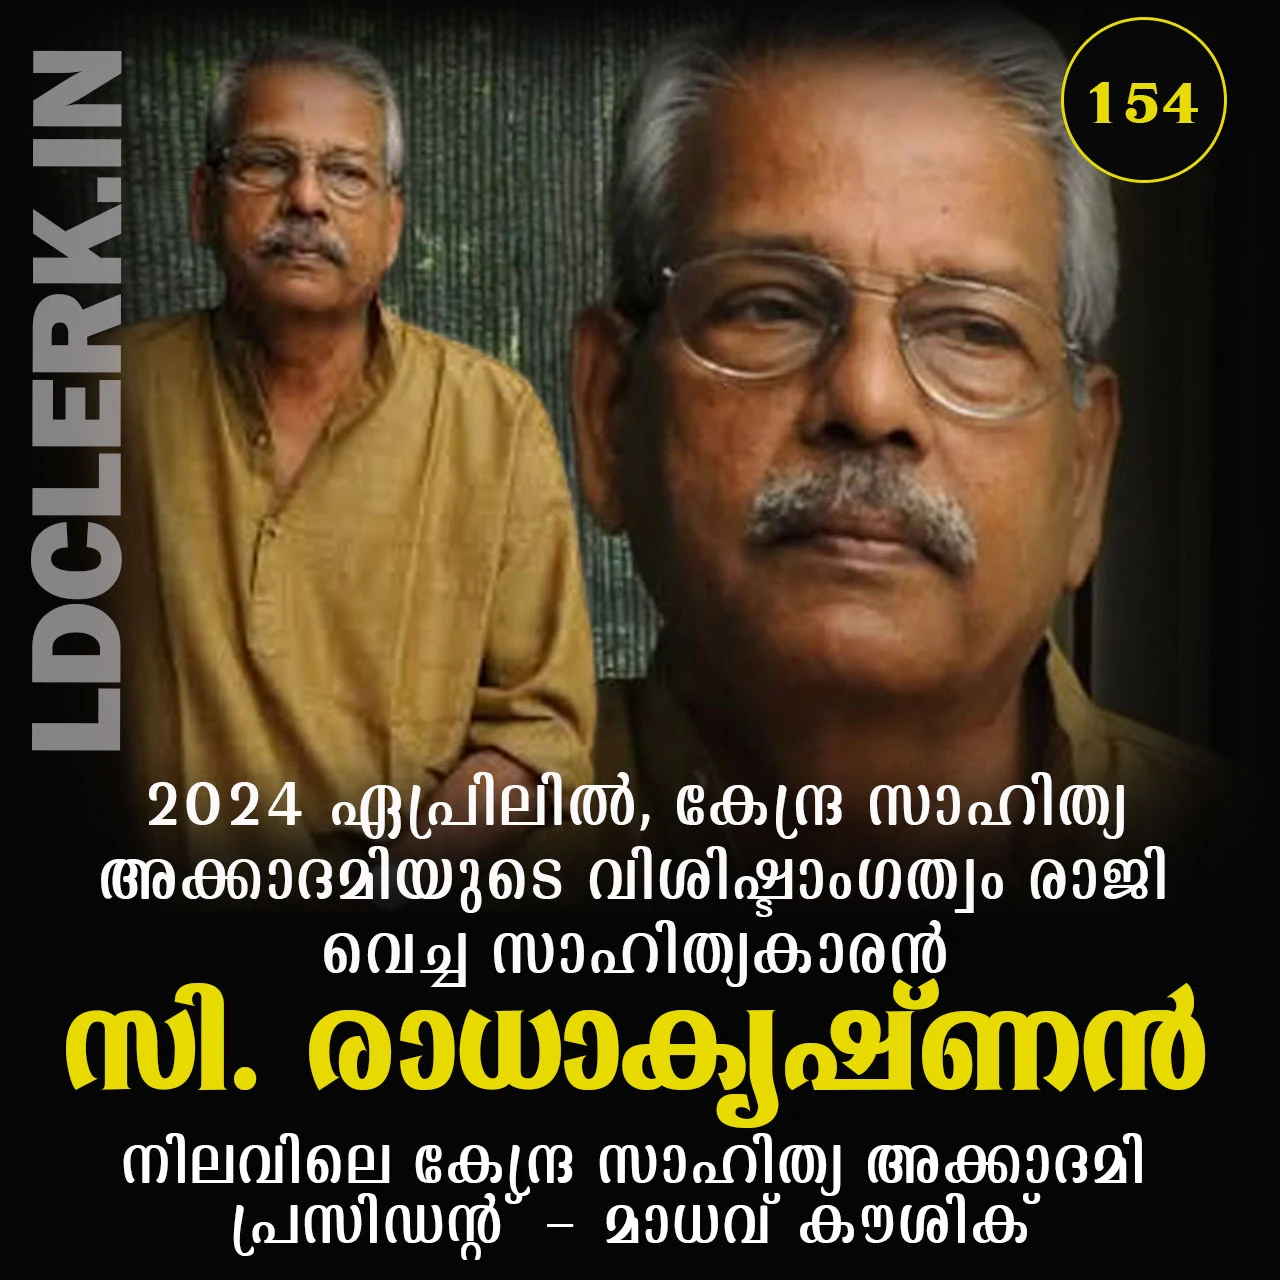 Daily Current Affairs Malayalam